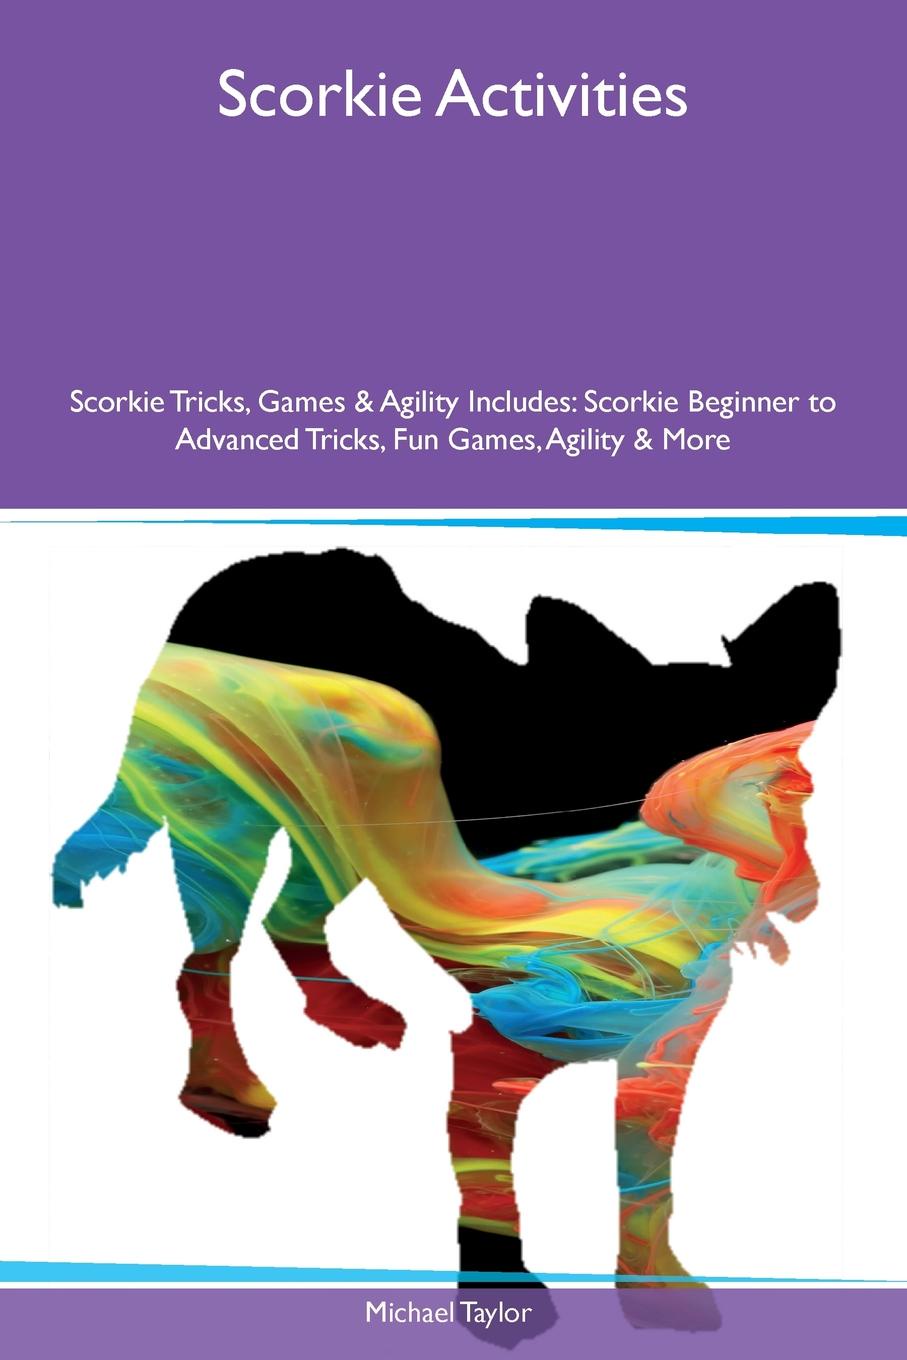 Scorkie Activities Scorkie Tricks, Games & Agility Includes. Scorkie Beginner to Advanced Tricks, Fun Games, Agility & More